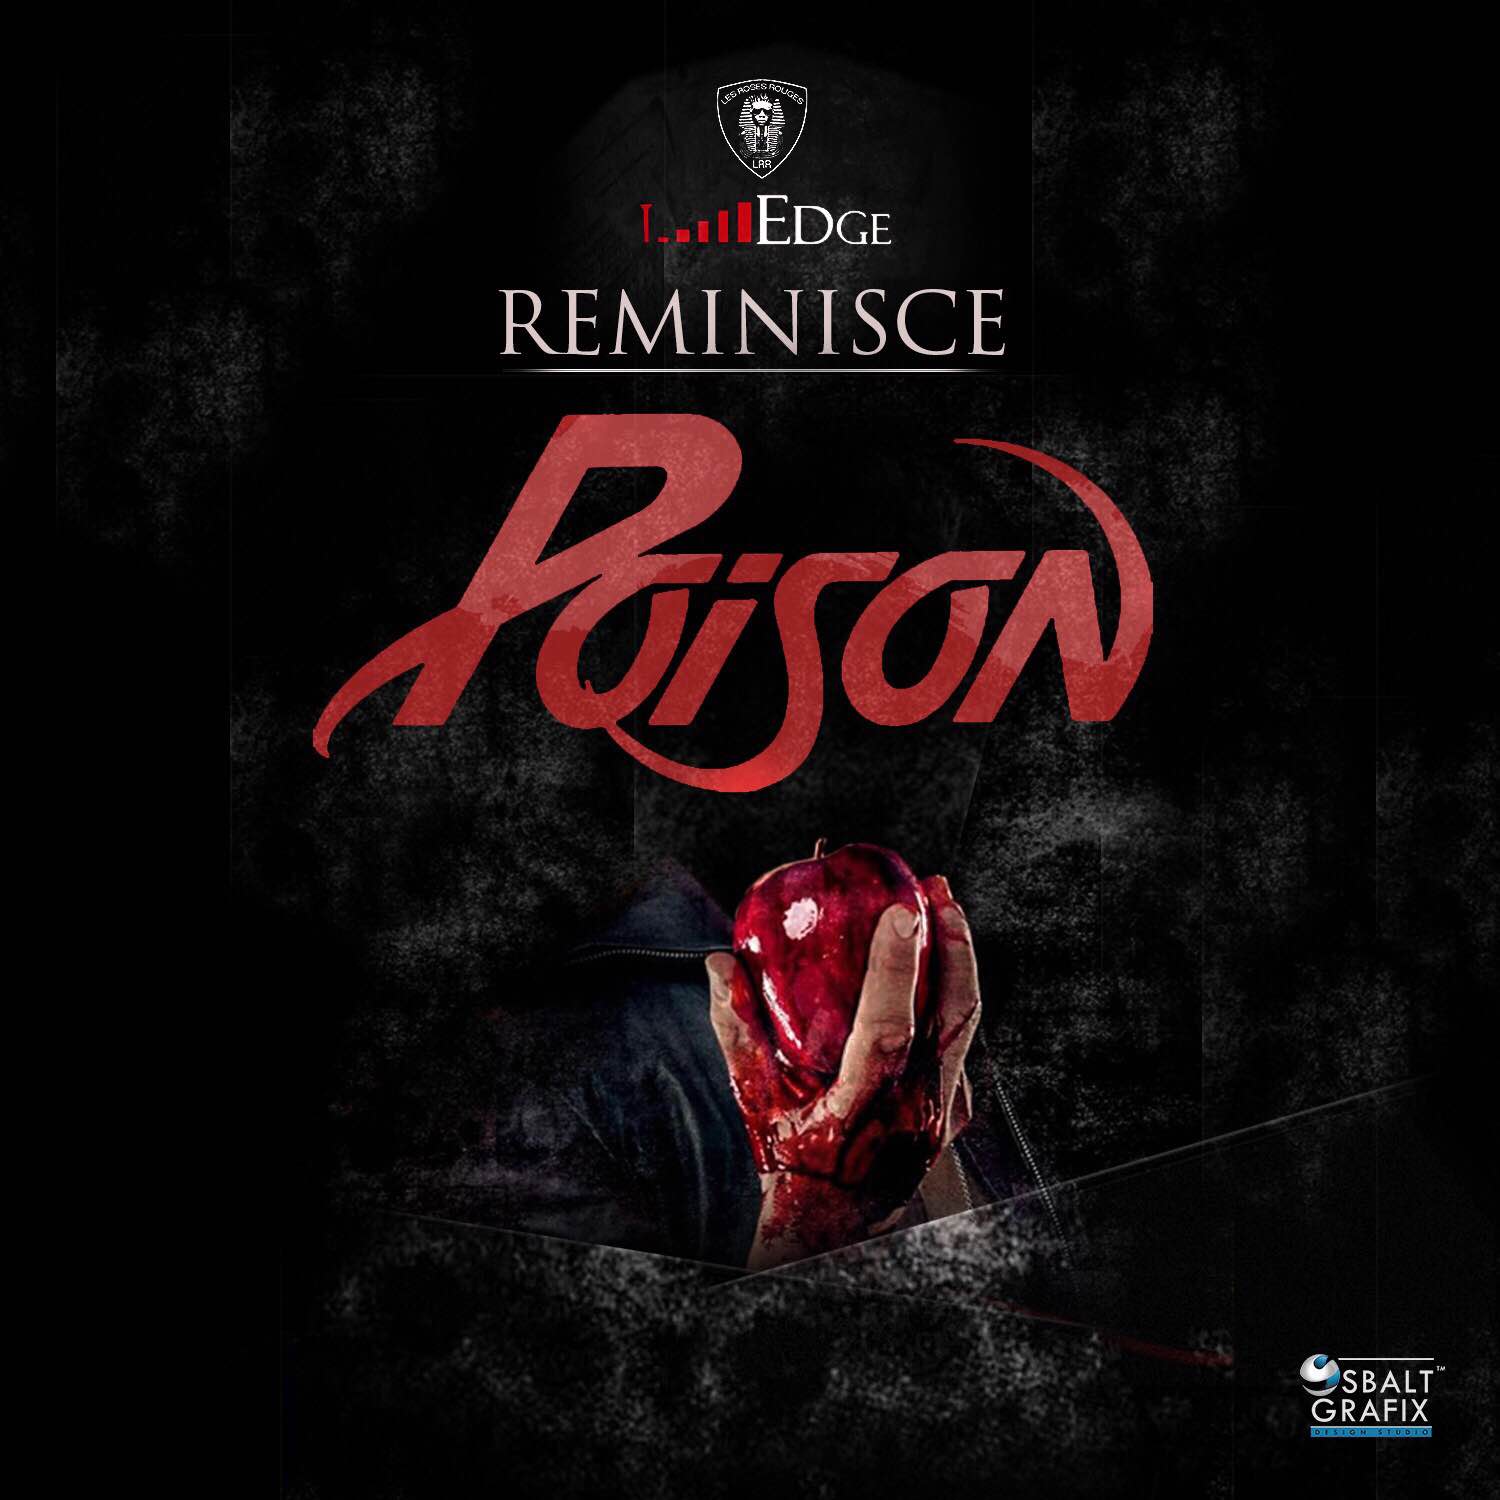 Reminisce - POISON (prod. by Tyce) Artwork | AceWorldTeam.com